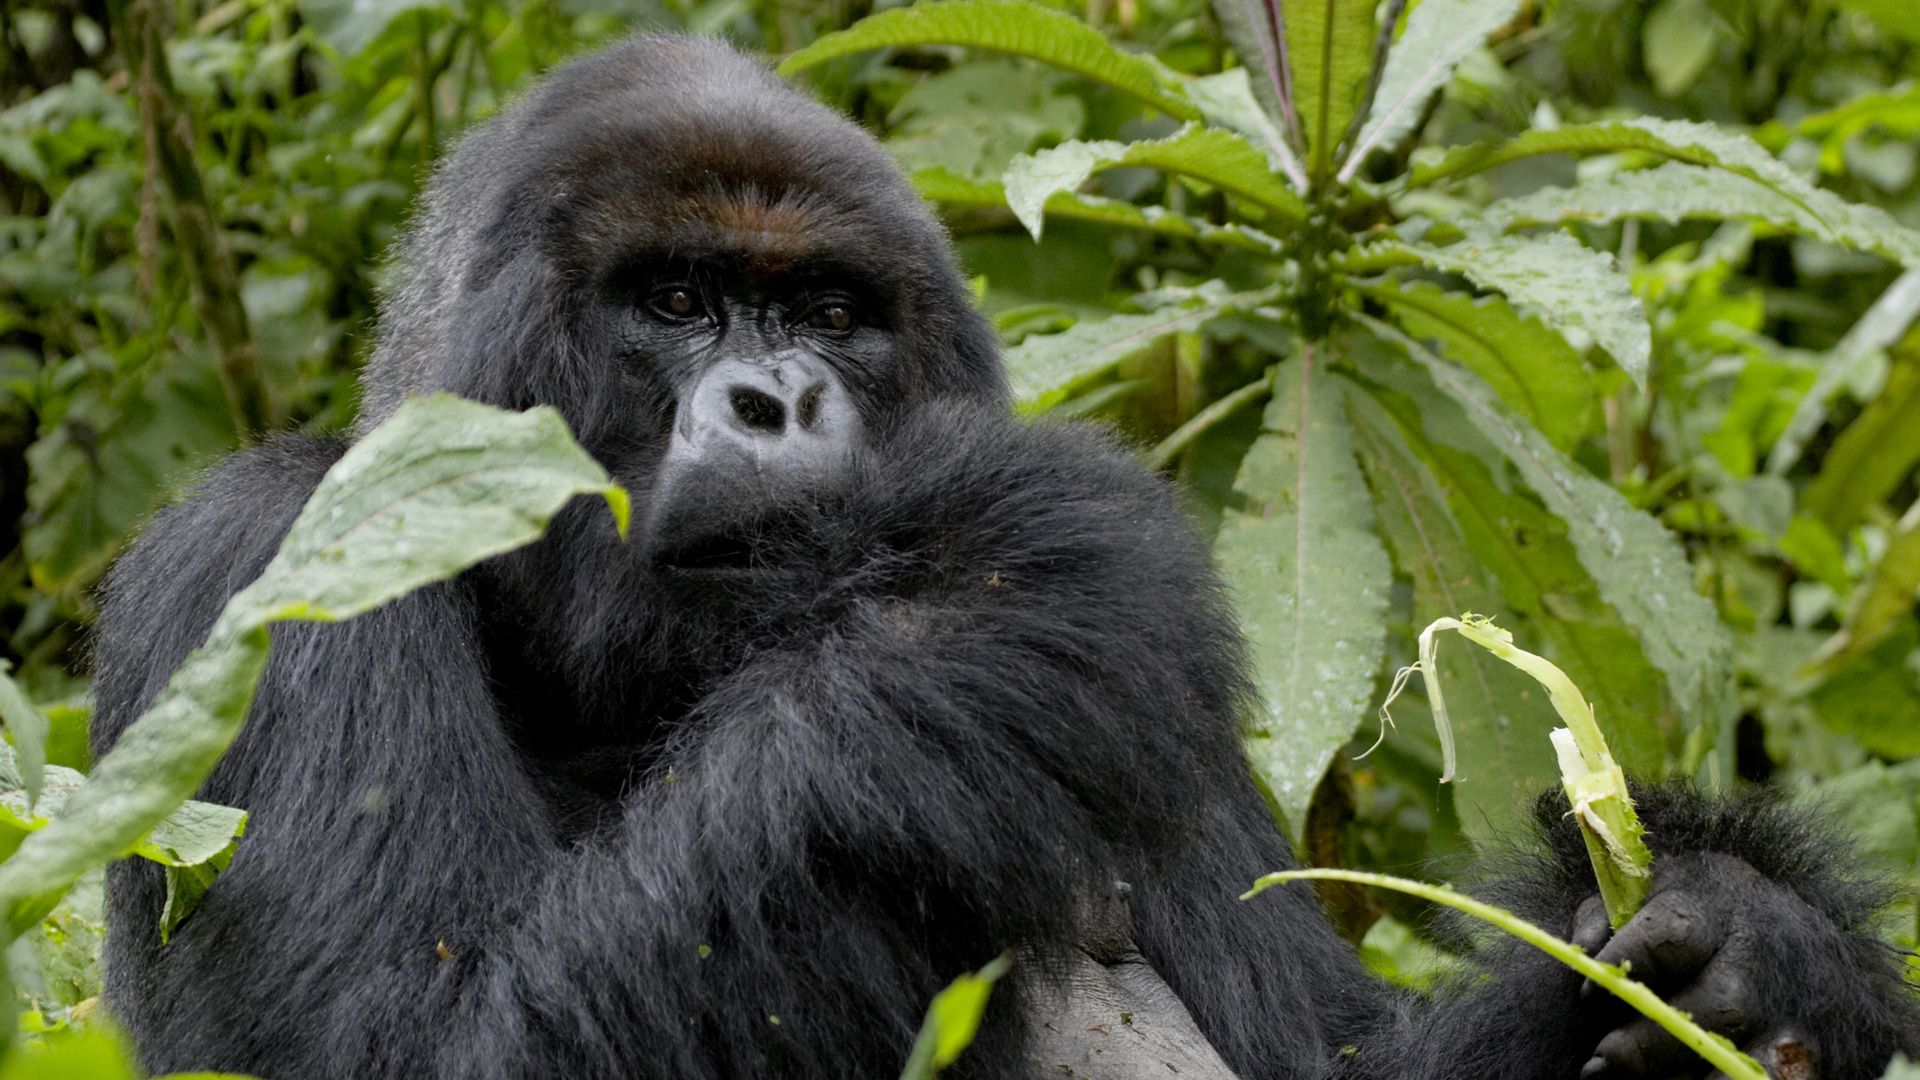 What to wear for Gorilla Trekking Safaris in Rwanda, Uganda and Congo?